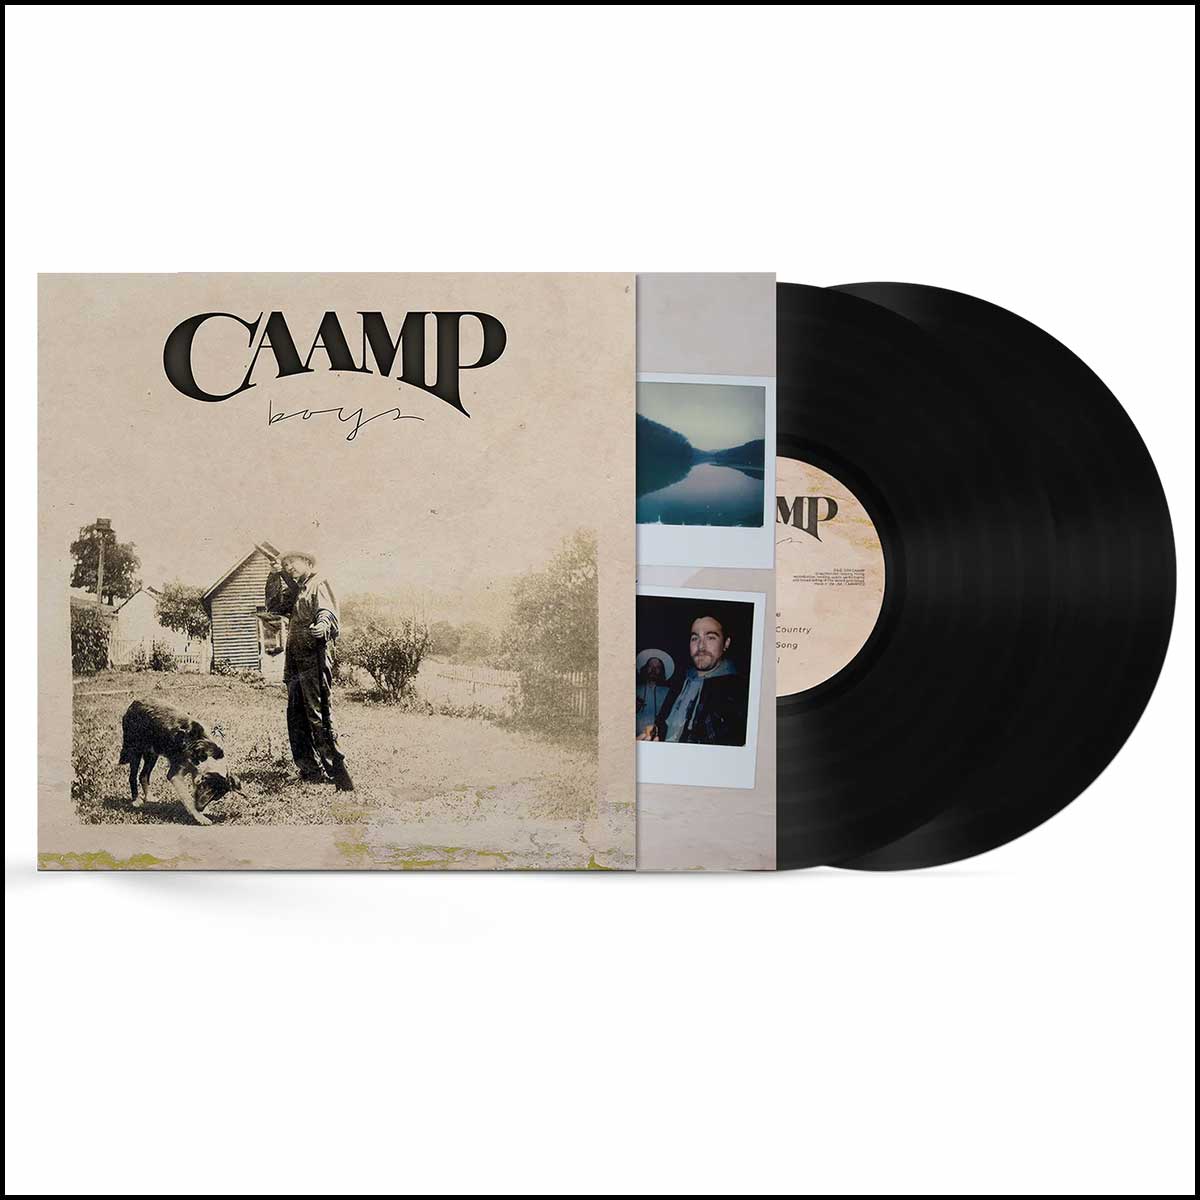 Caamp Boys 2 LP Vinyl Record